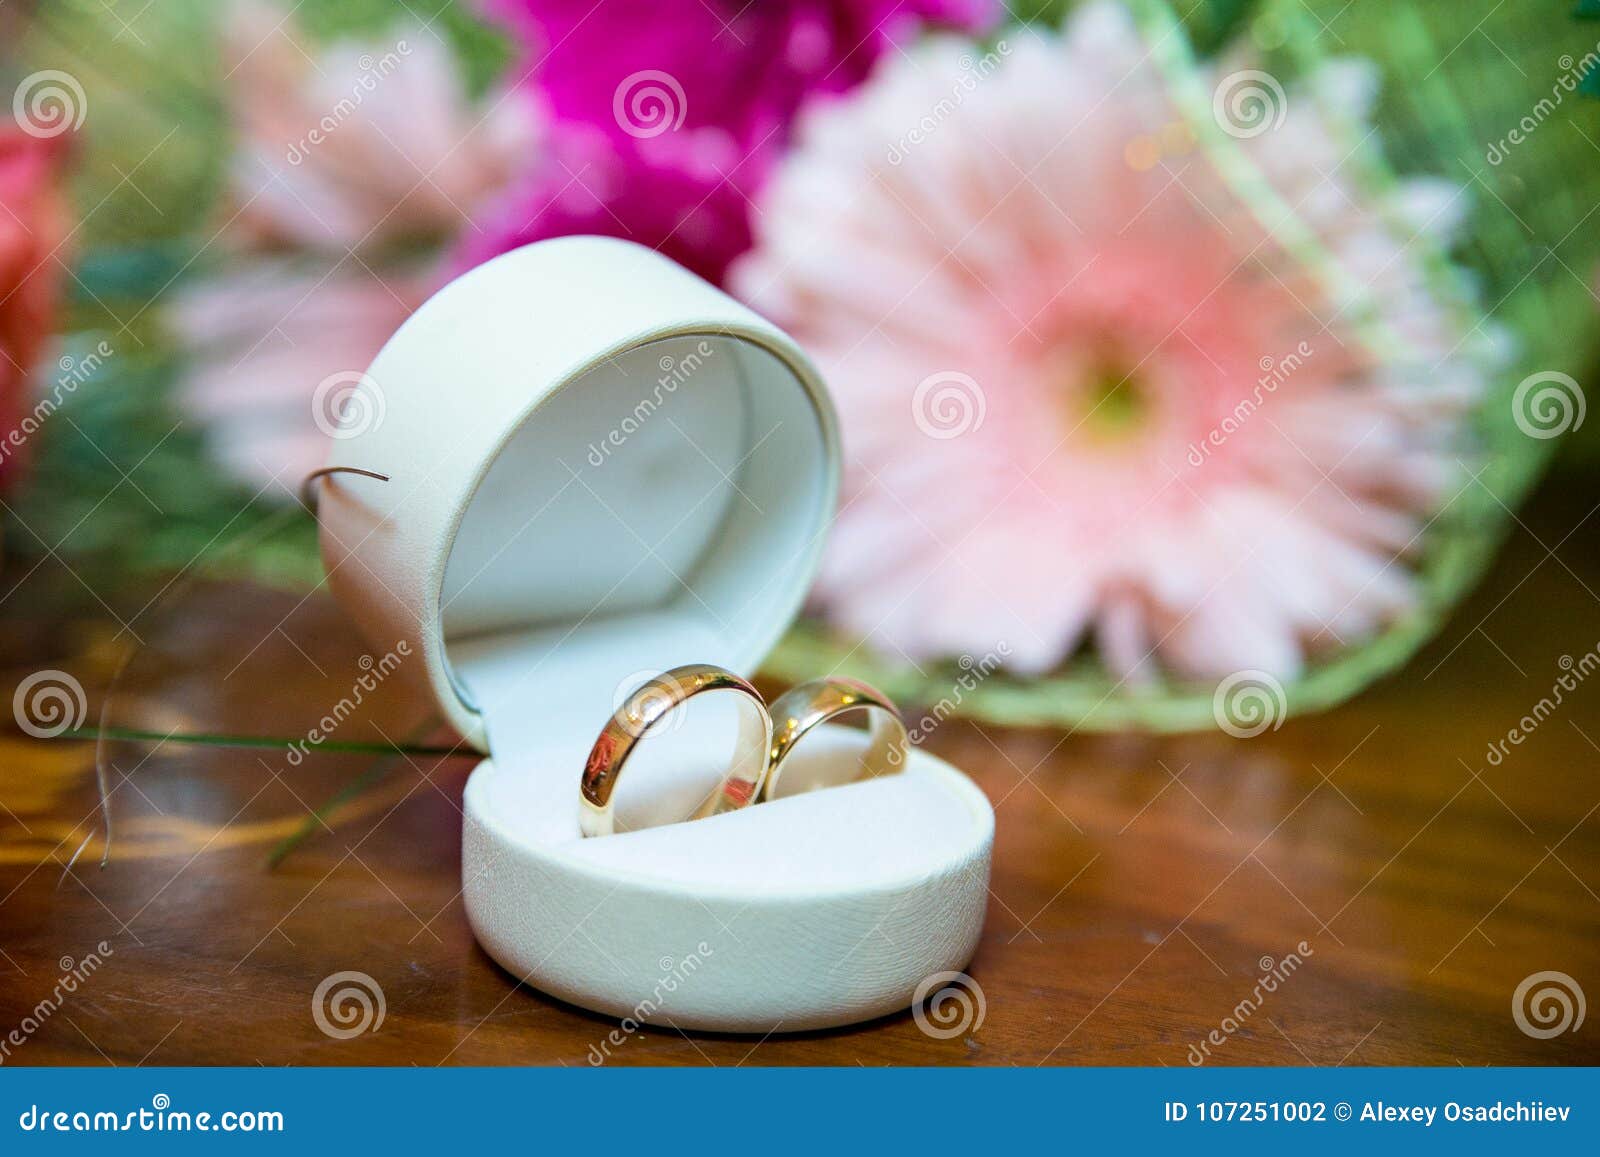 Two wedding rings stock photo. Image of honeymoon, card - 107251002